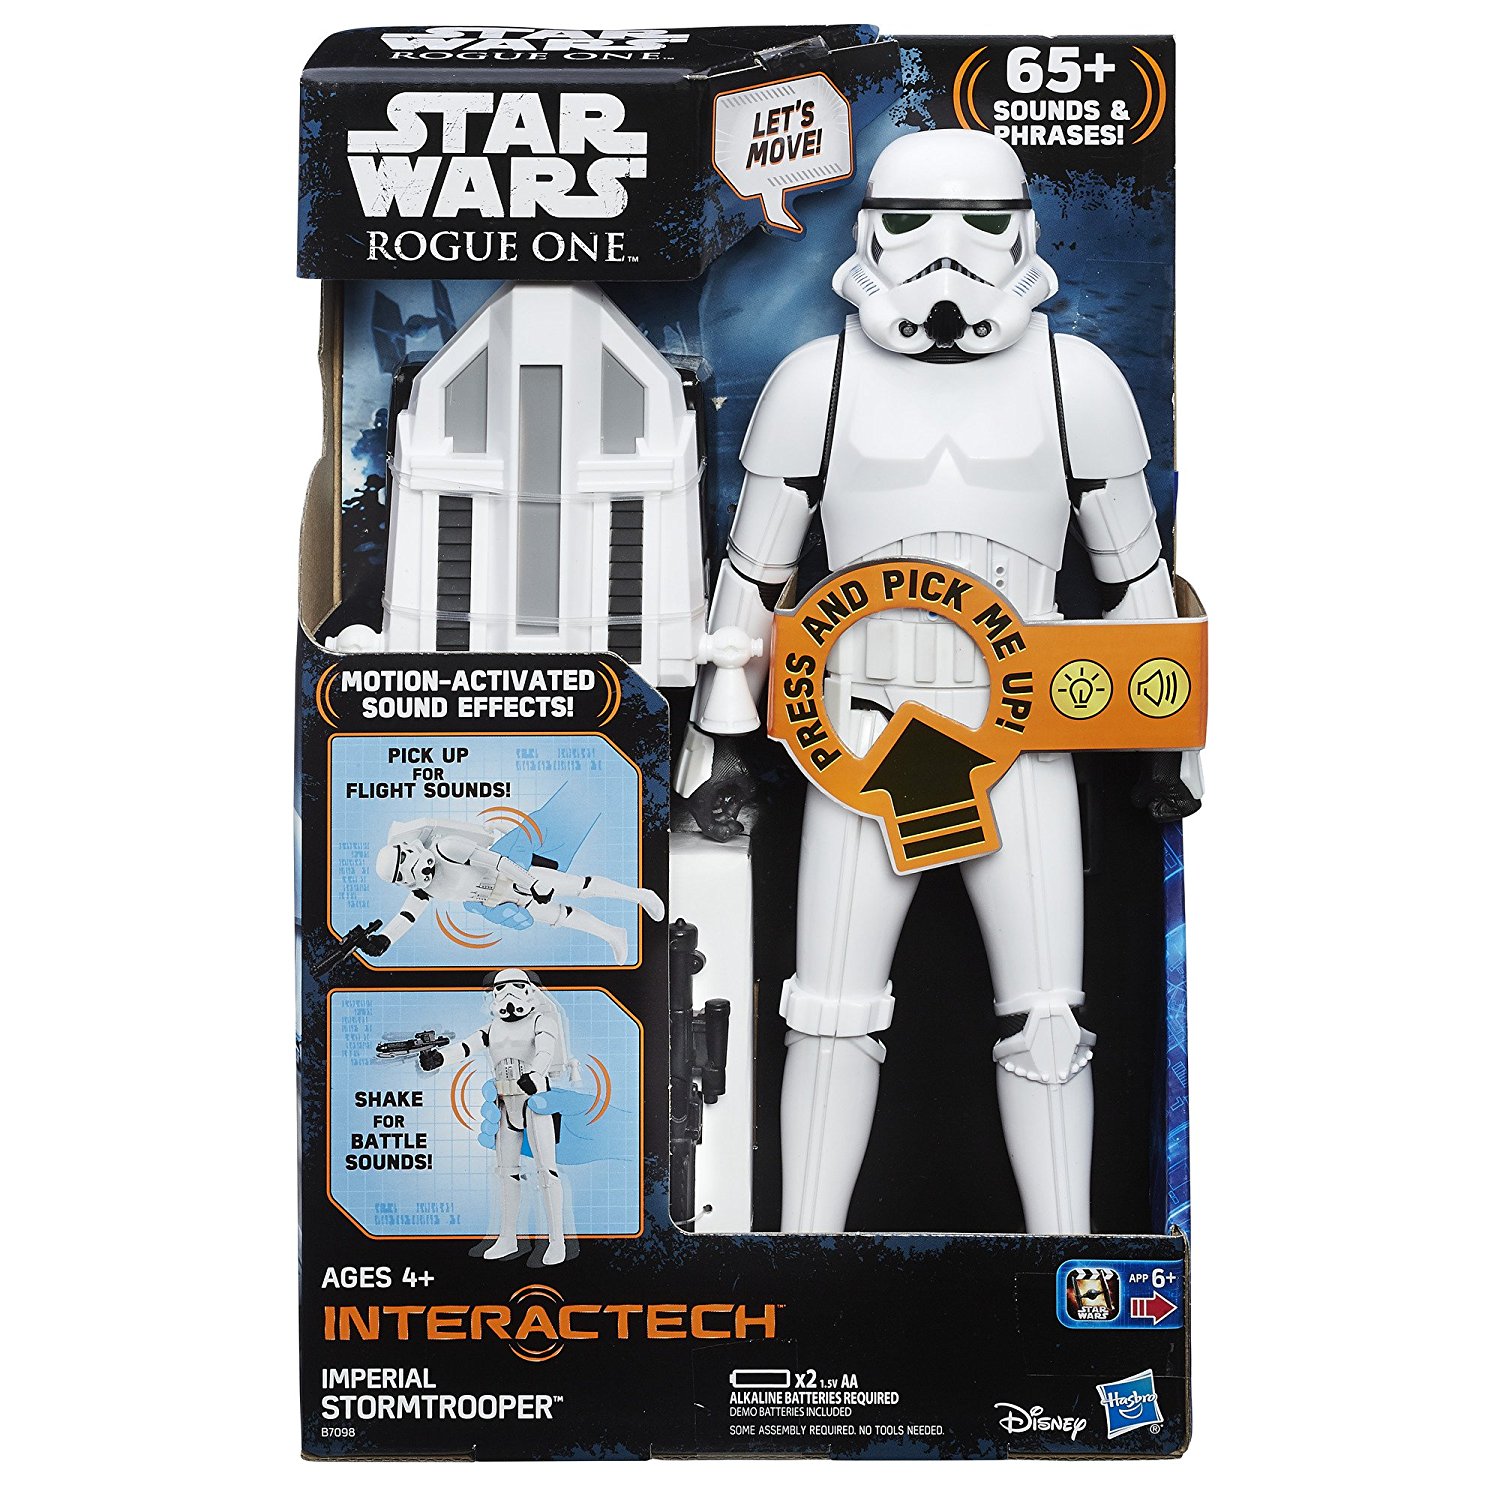 Star Wars Interactech Imperial Stormtrooper Figure - image 5 of 5